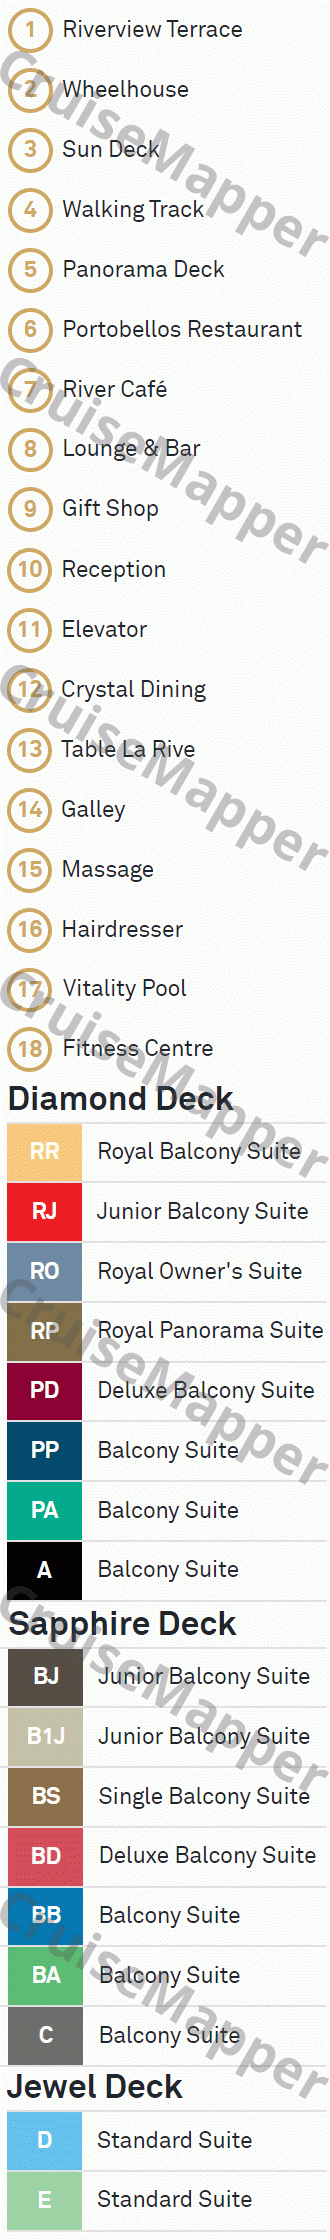 Scenic Opal deck 3 plan (Diamond-Lobby-Lounge) legend